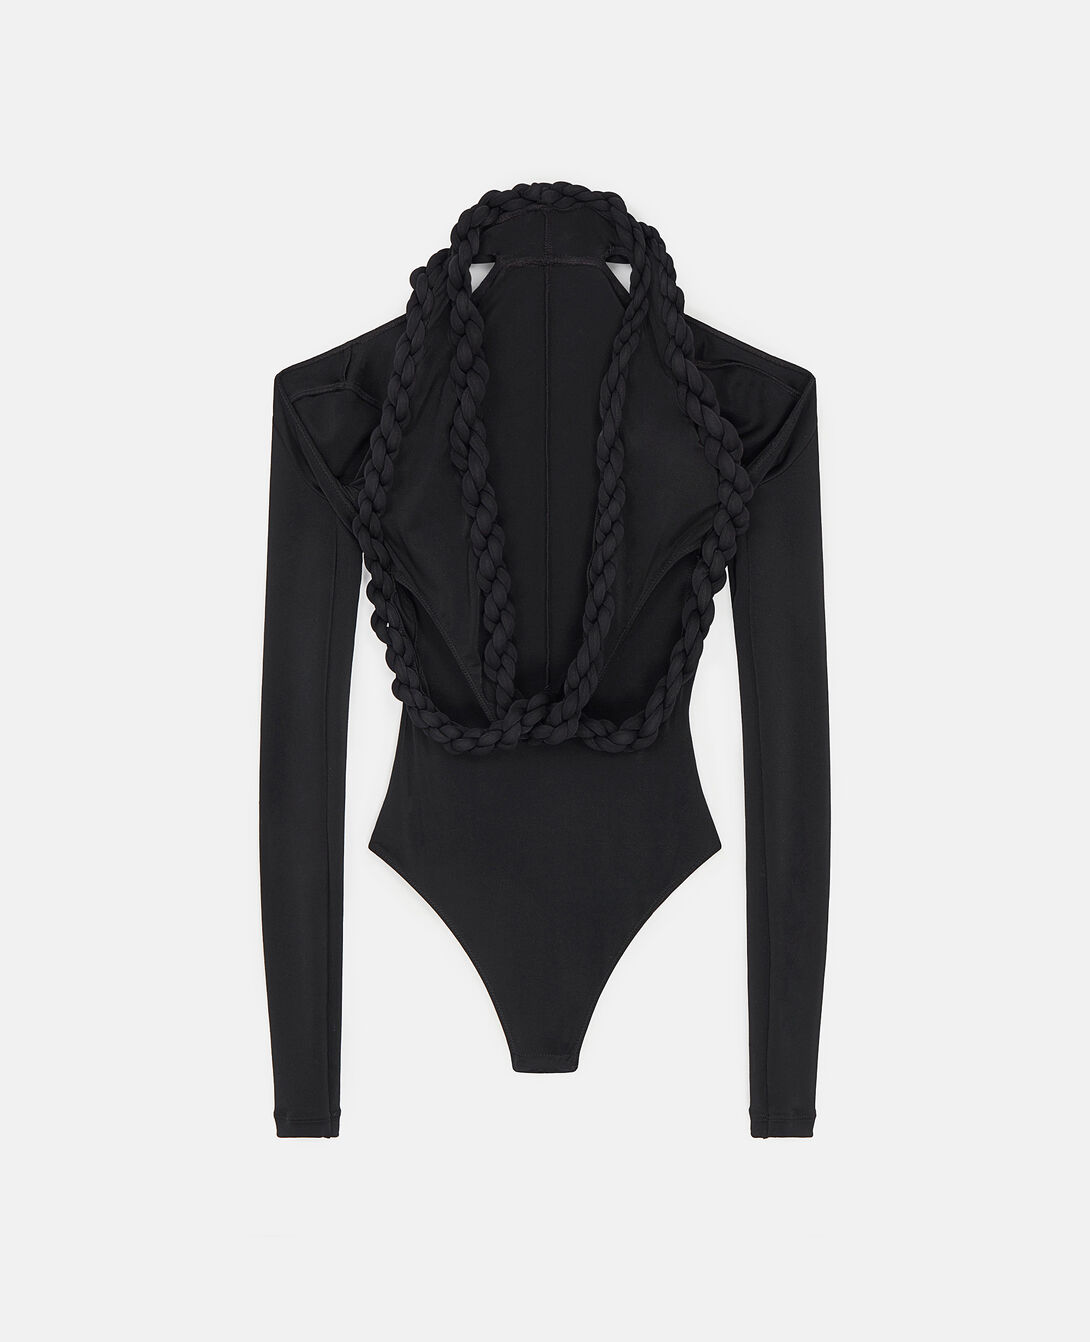 Women's Black Slinky Diamante Square Neck Strappy Bodysuit